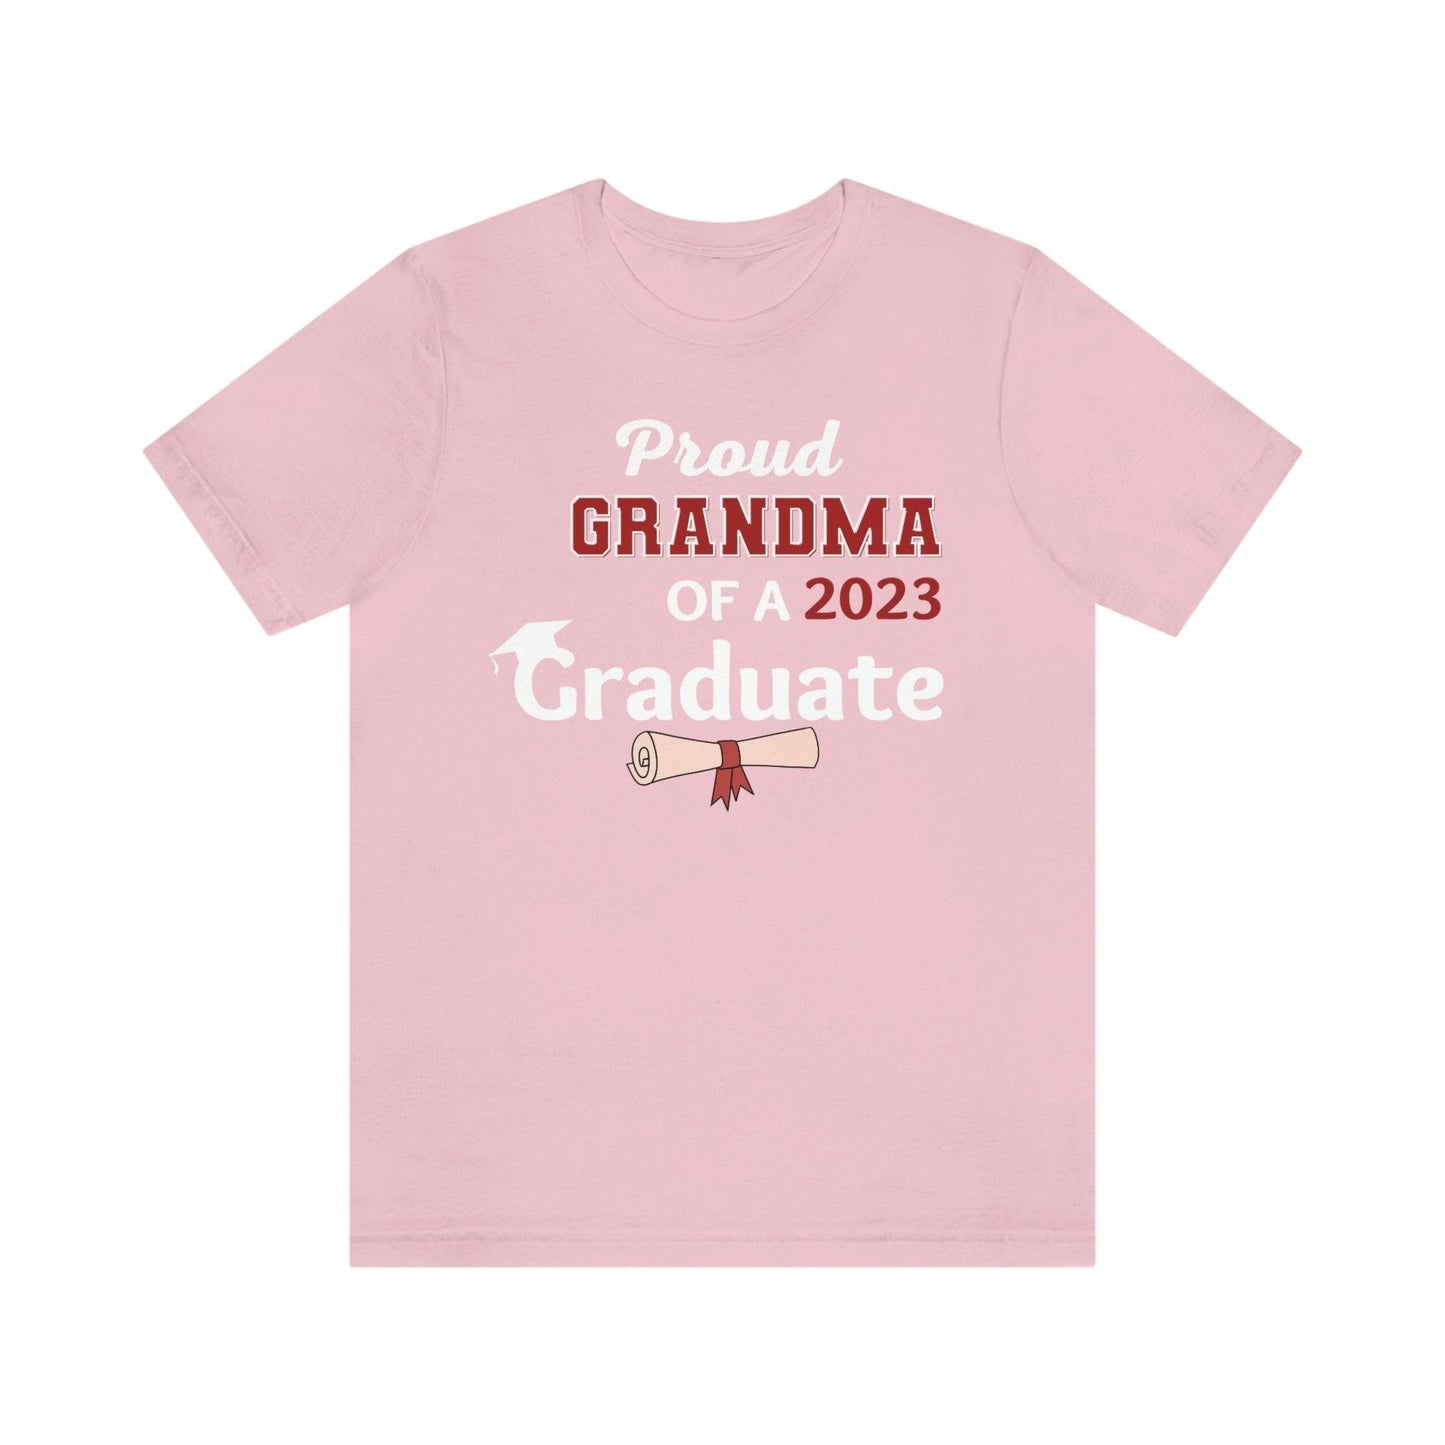 Proud Grandma of a graduate - Graduation shirt - Graduation gift